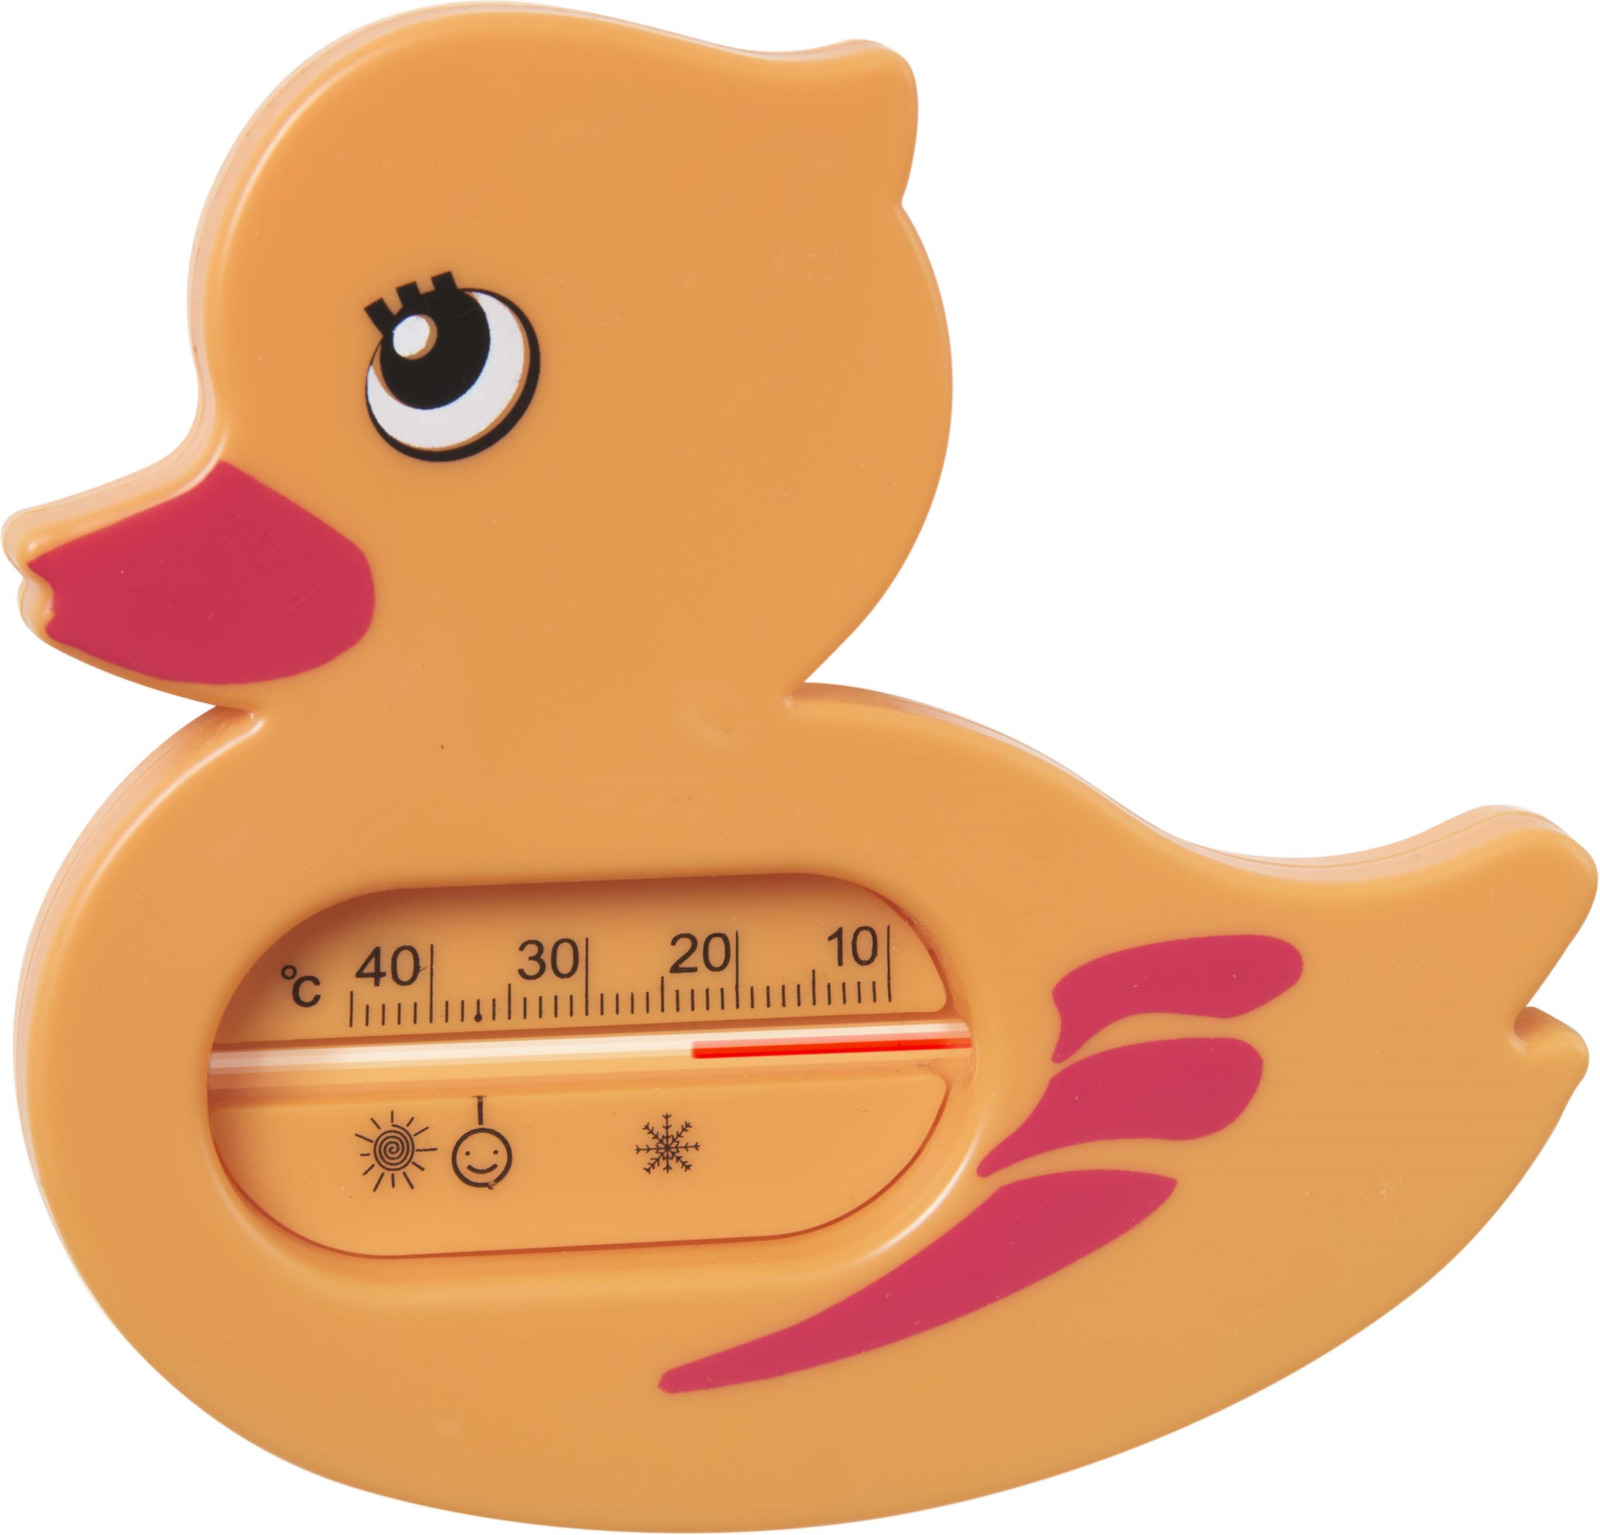 Термометр для воды Курносики 